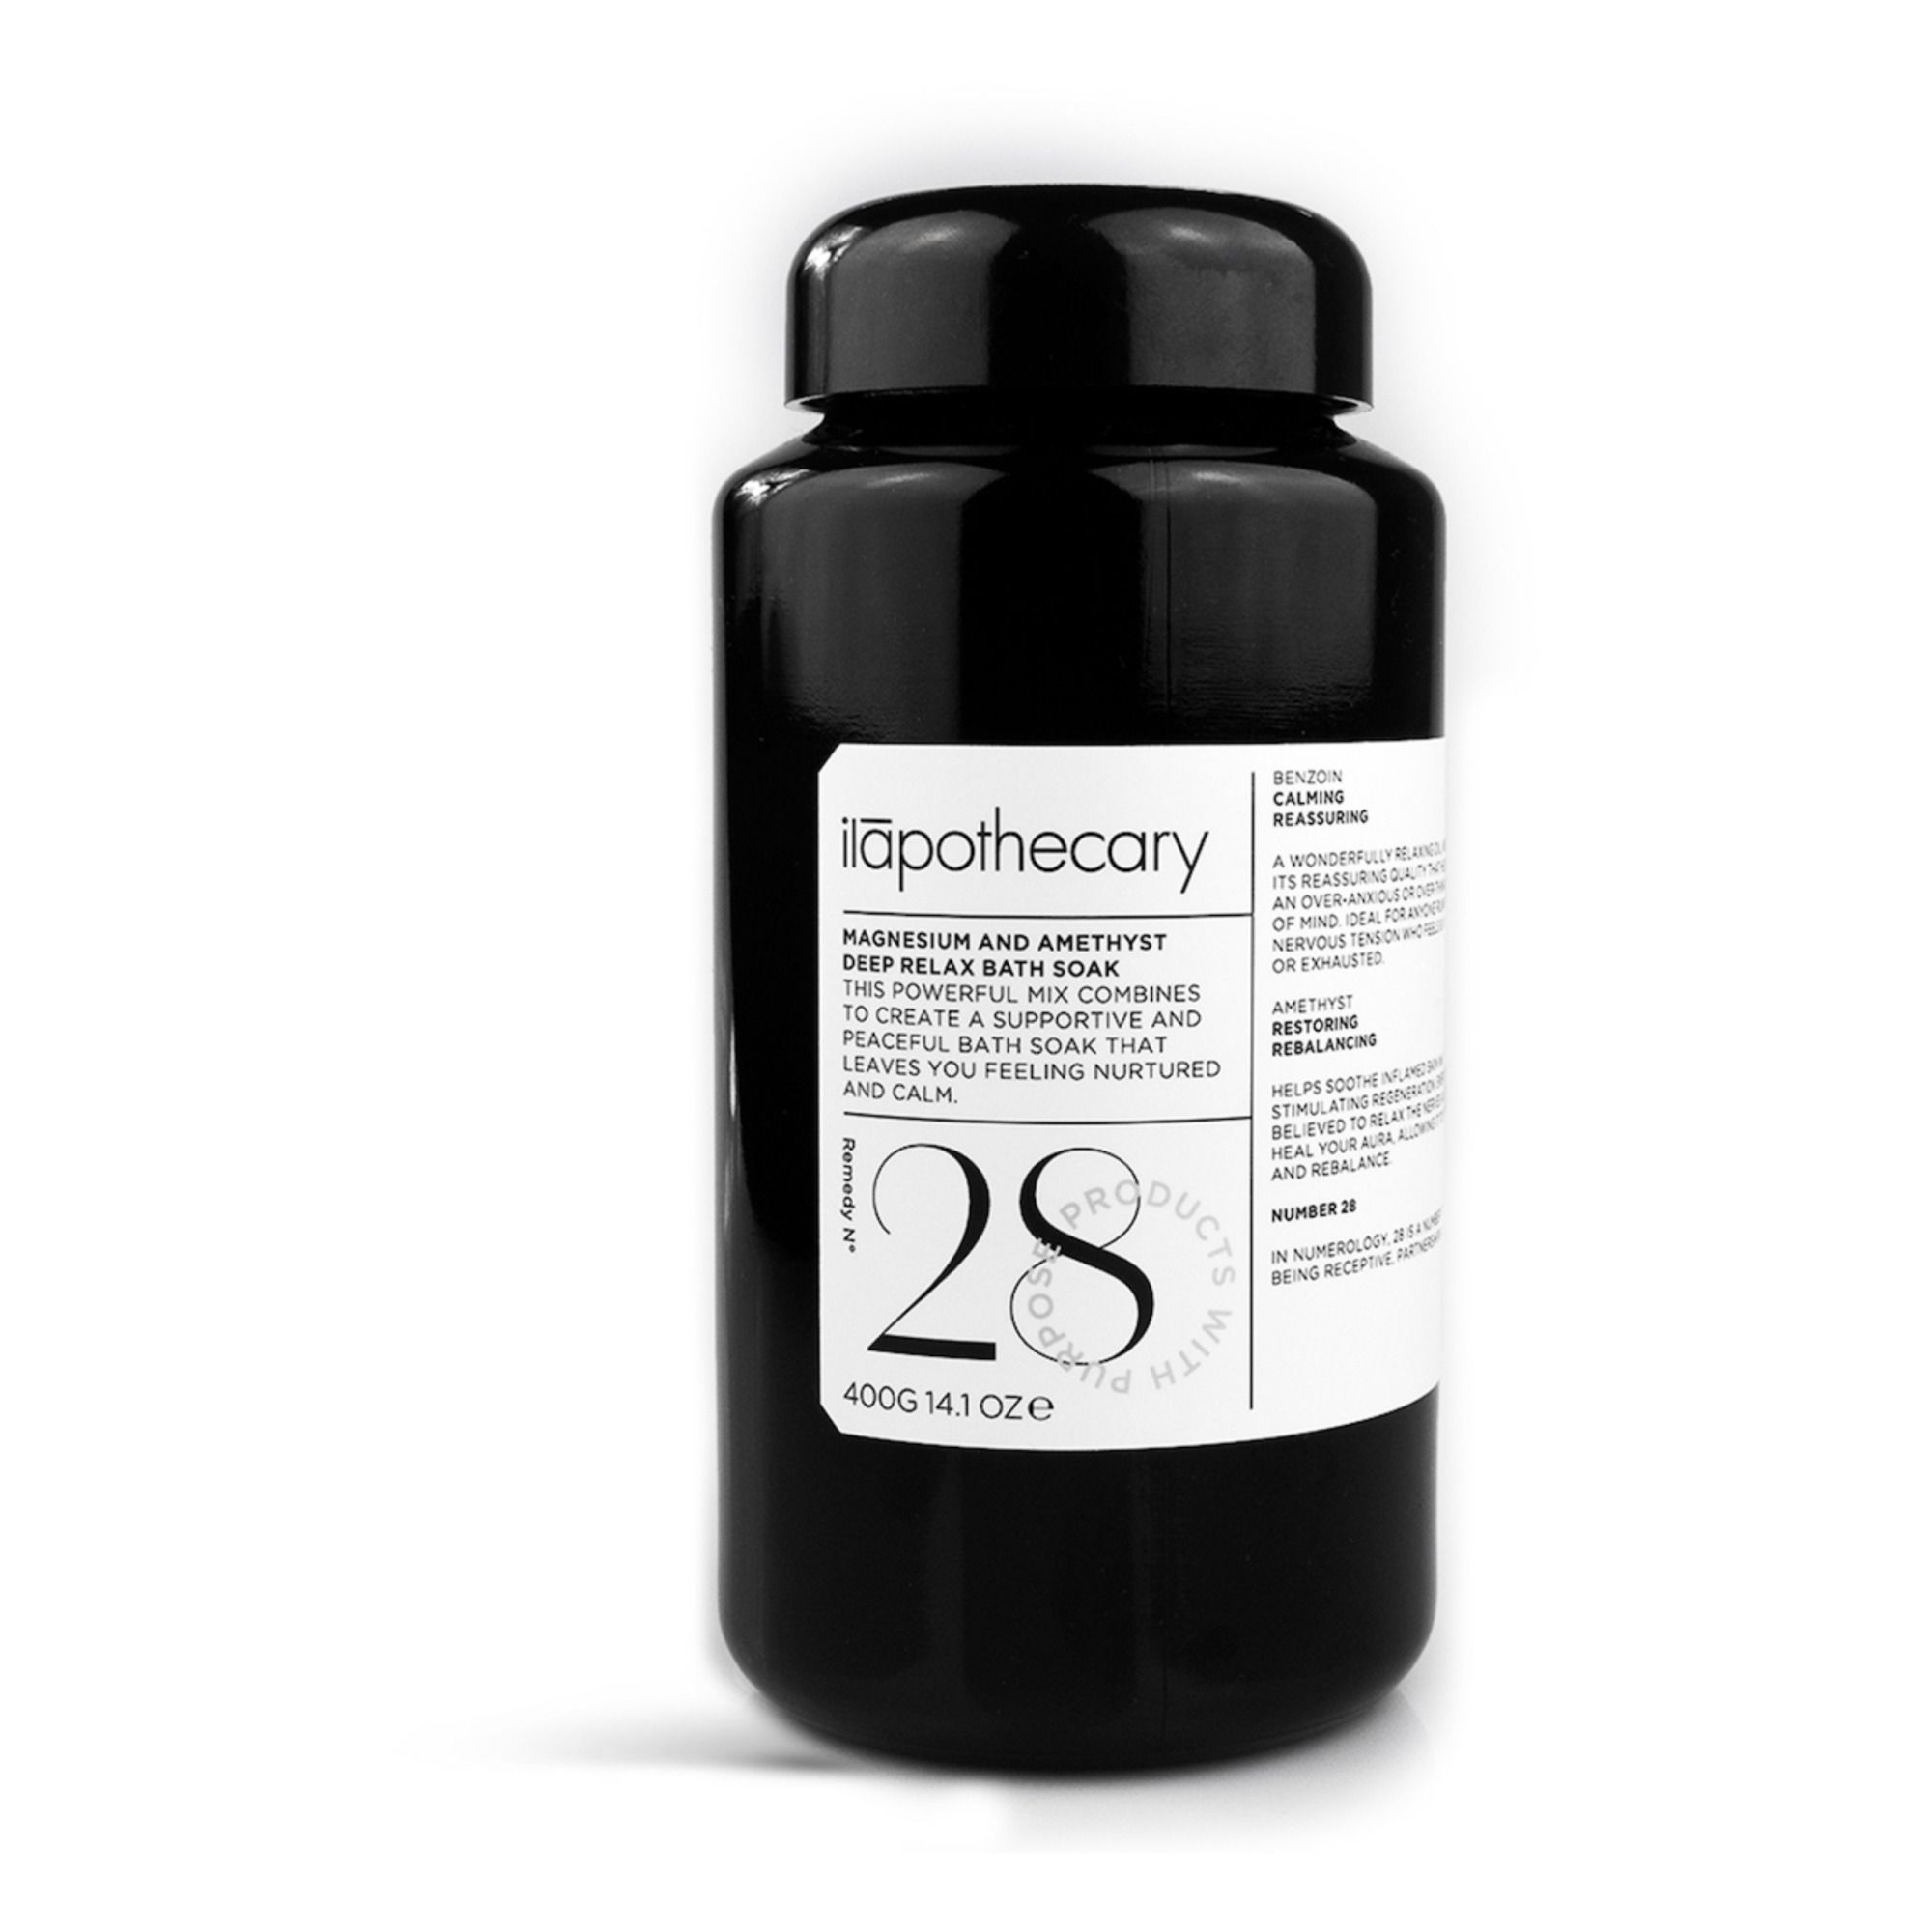 Ilapothecary - Sels de bain Deep relax magnésium et amethyst - 400g - Blanc